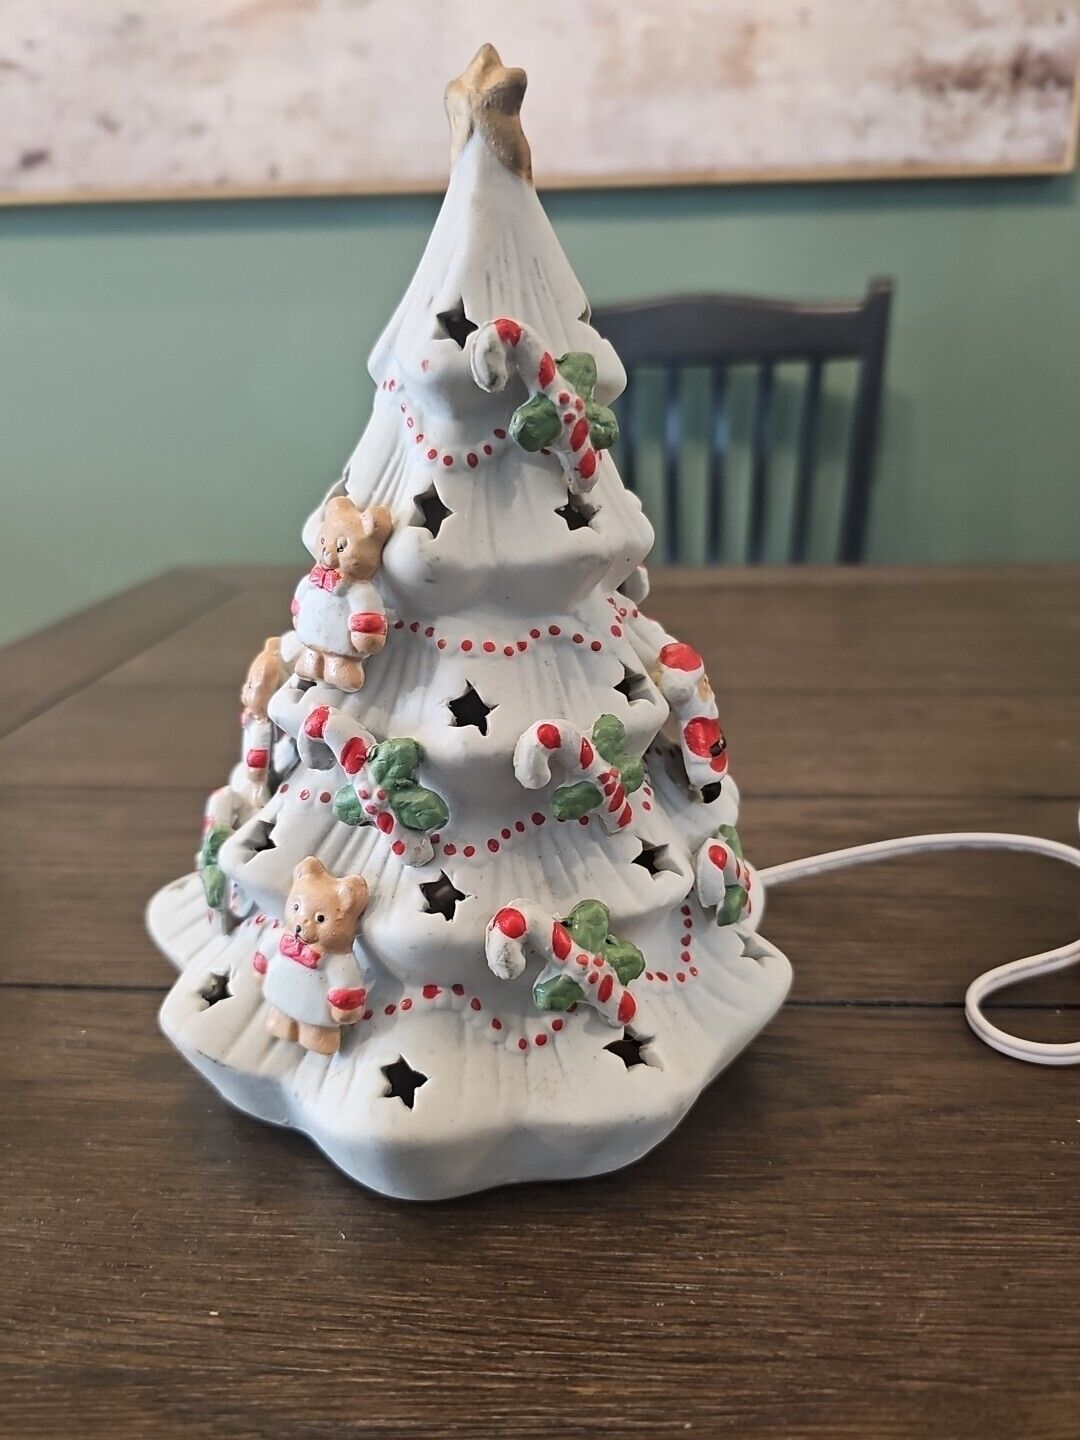 Vintage Ceramic Light Up White Christmas Tree  Candy Canes, Teddy Bears, Santa